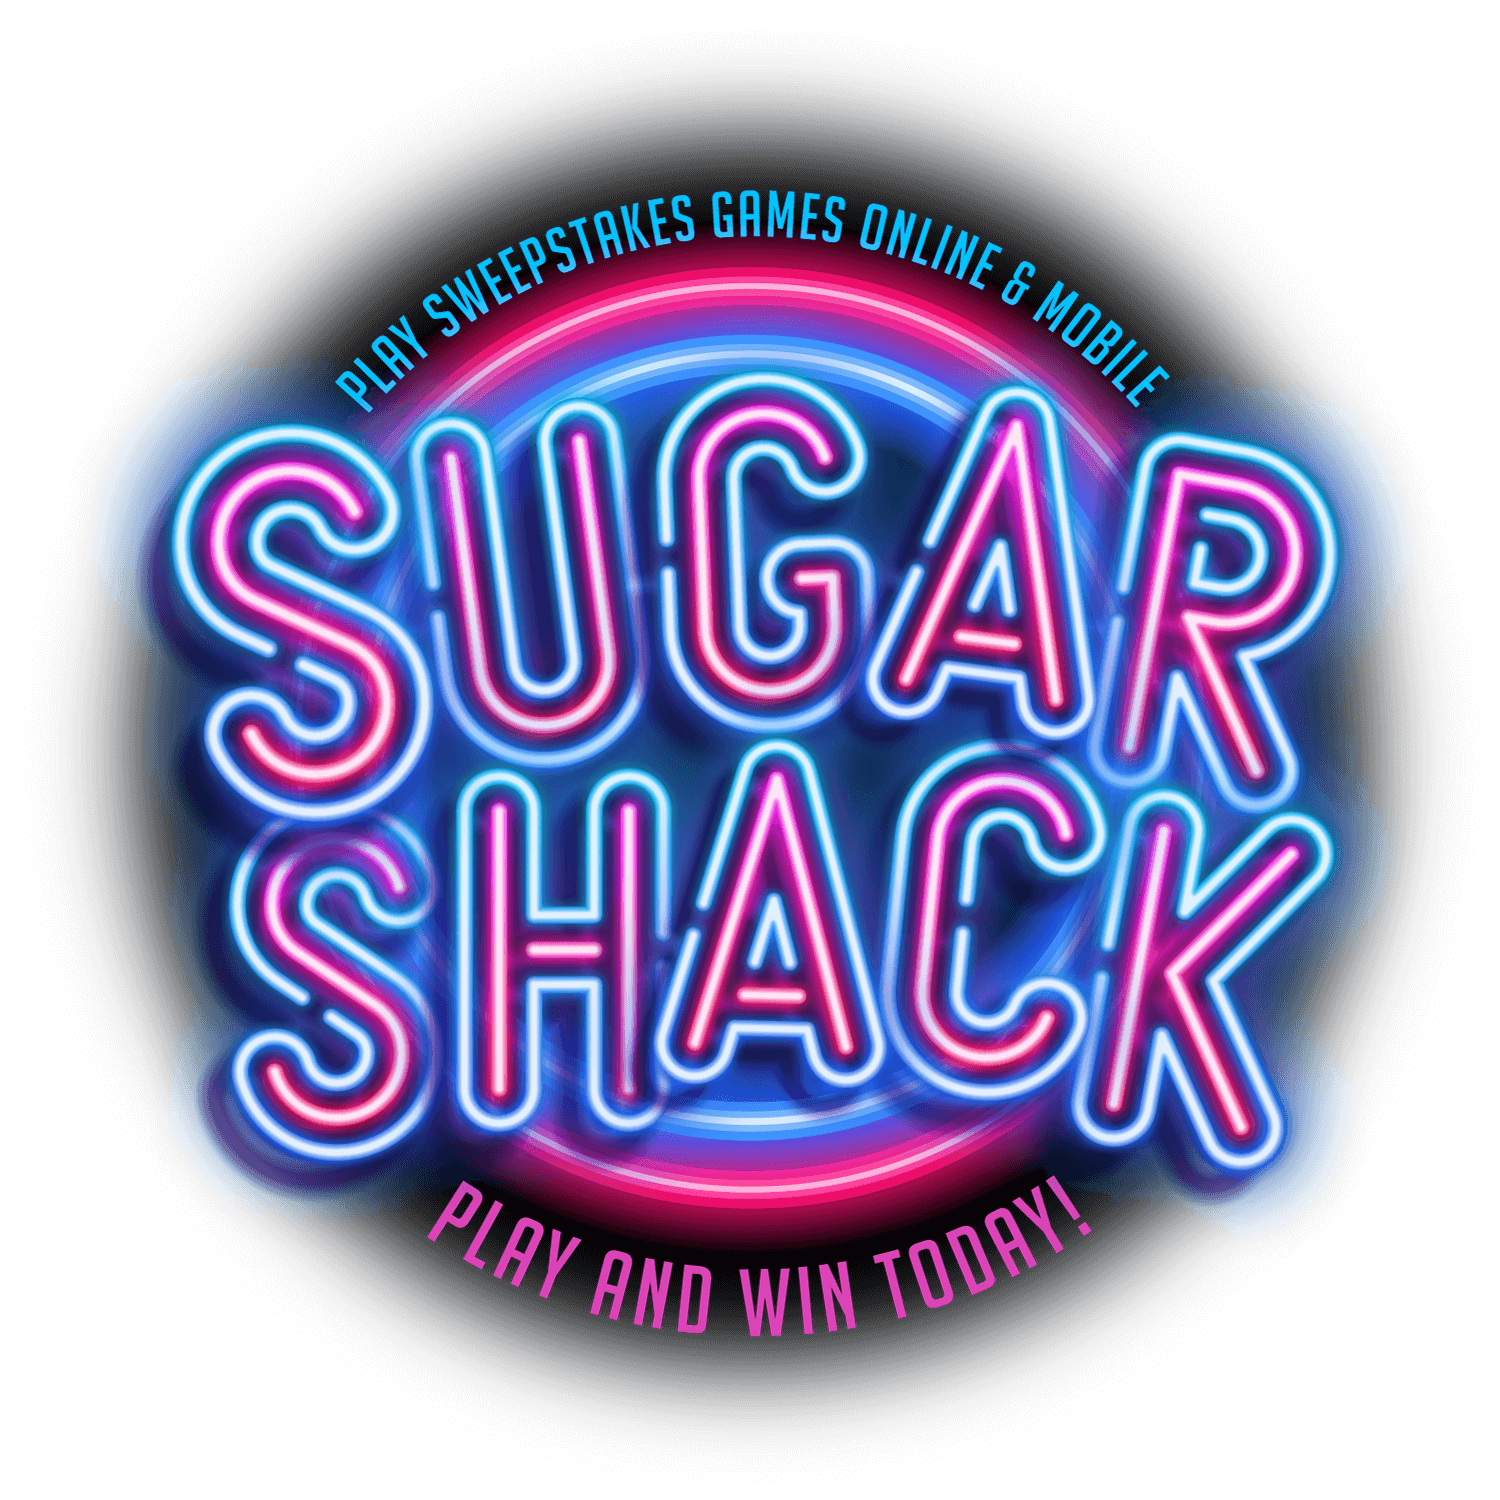 SugarShack